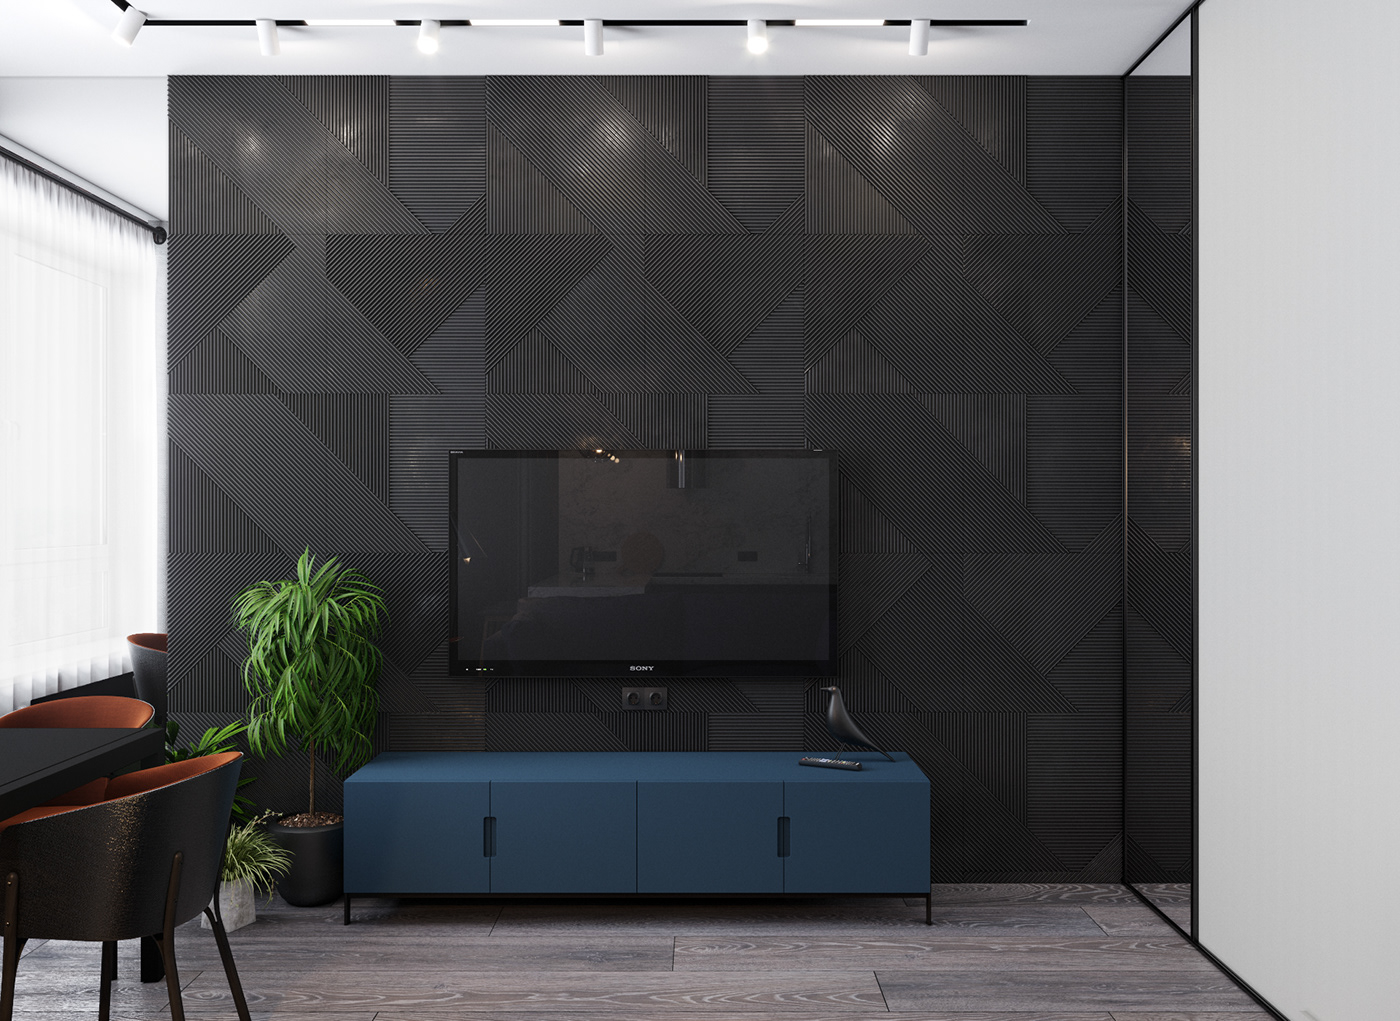 3dmax bath brick wall corona render  hallway kitchen one-room apartment plaster sofa studio